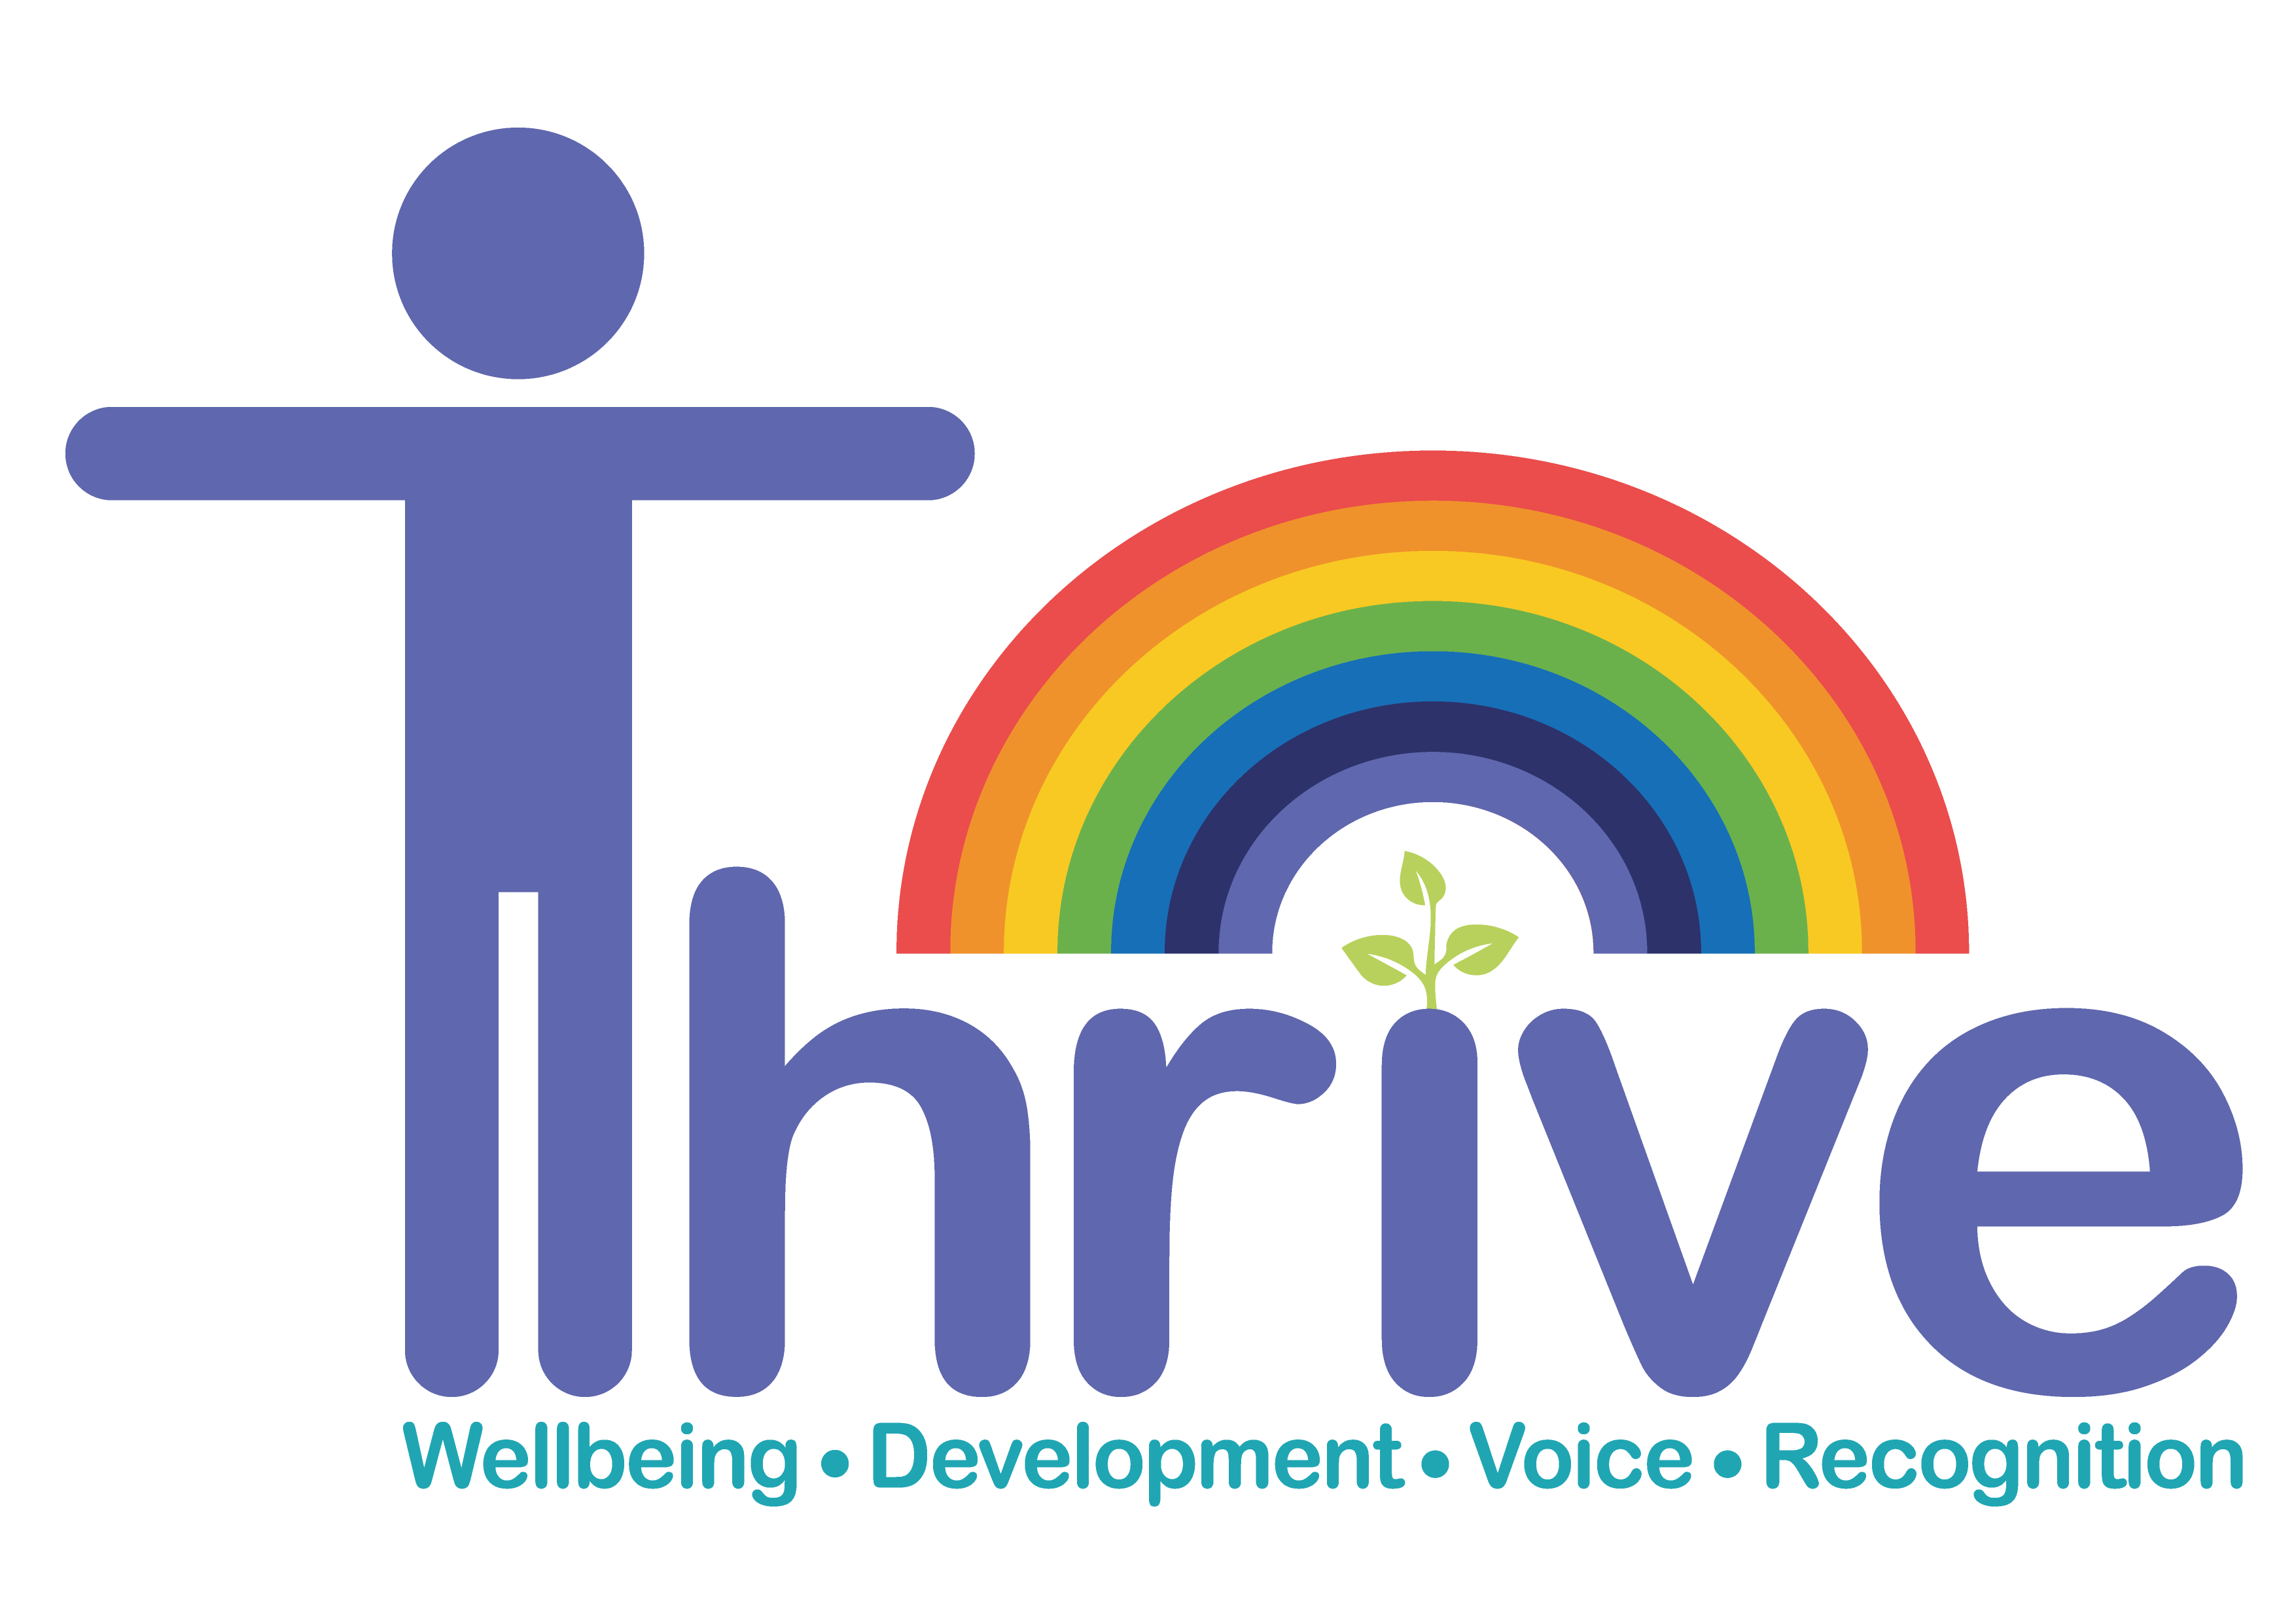 Thrive logo: wellbeing, development, voice, recognition